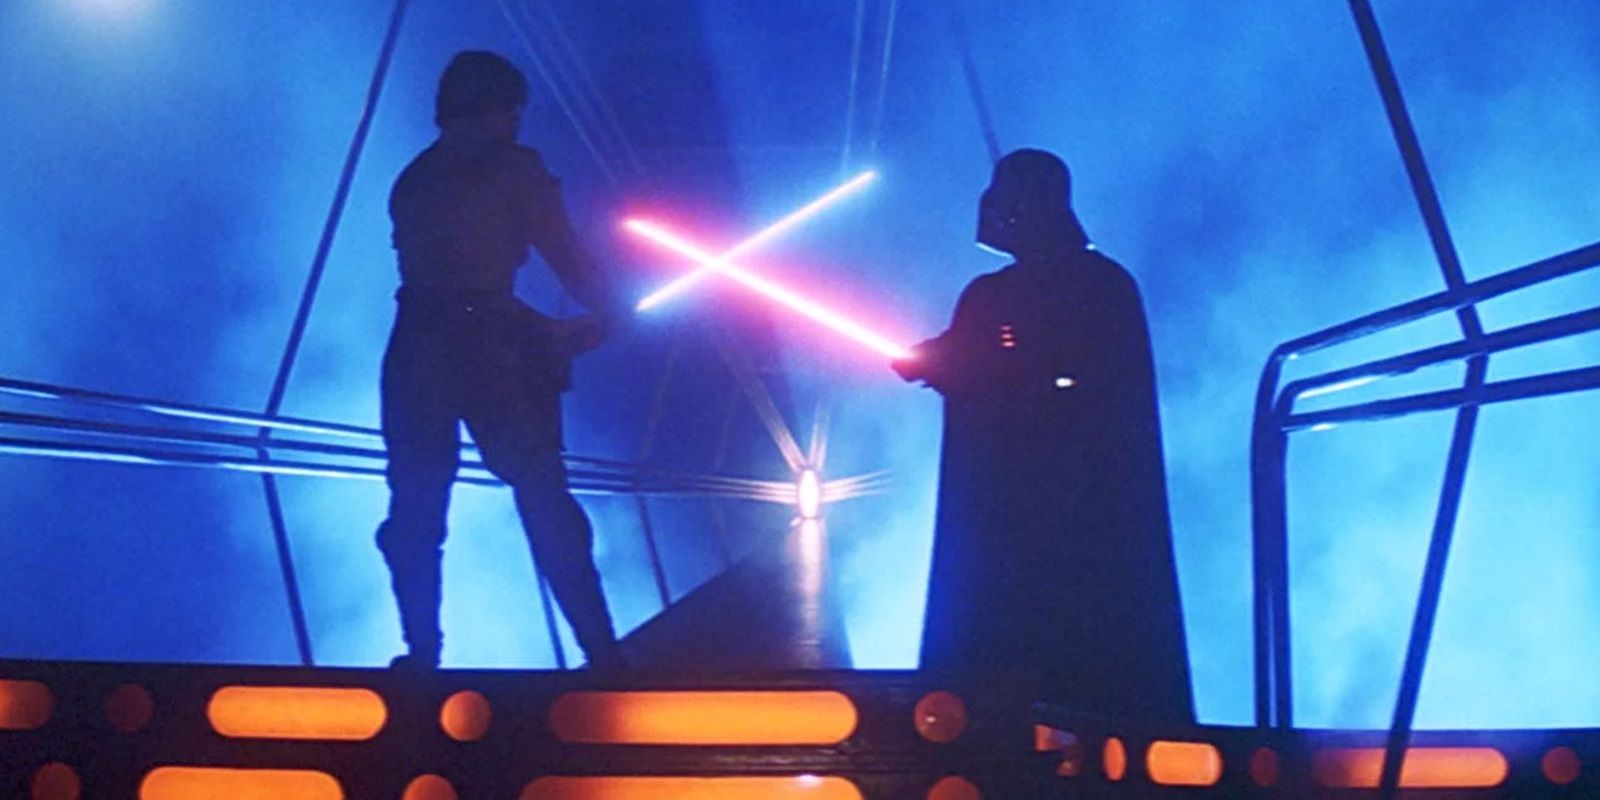 Luke Skywalker in a battle with Darth Vader.